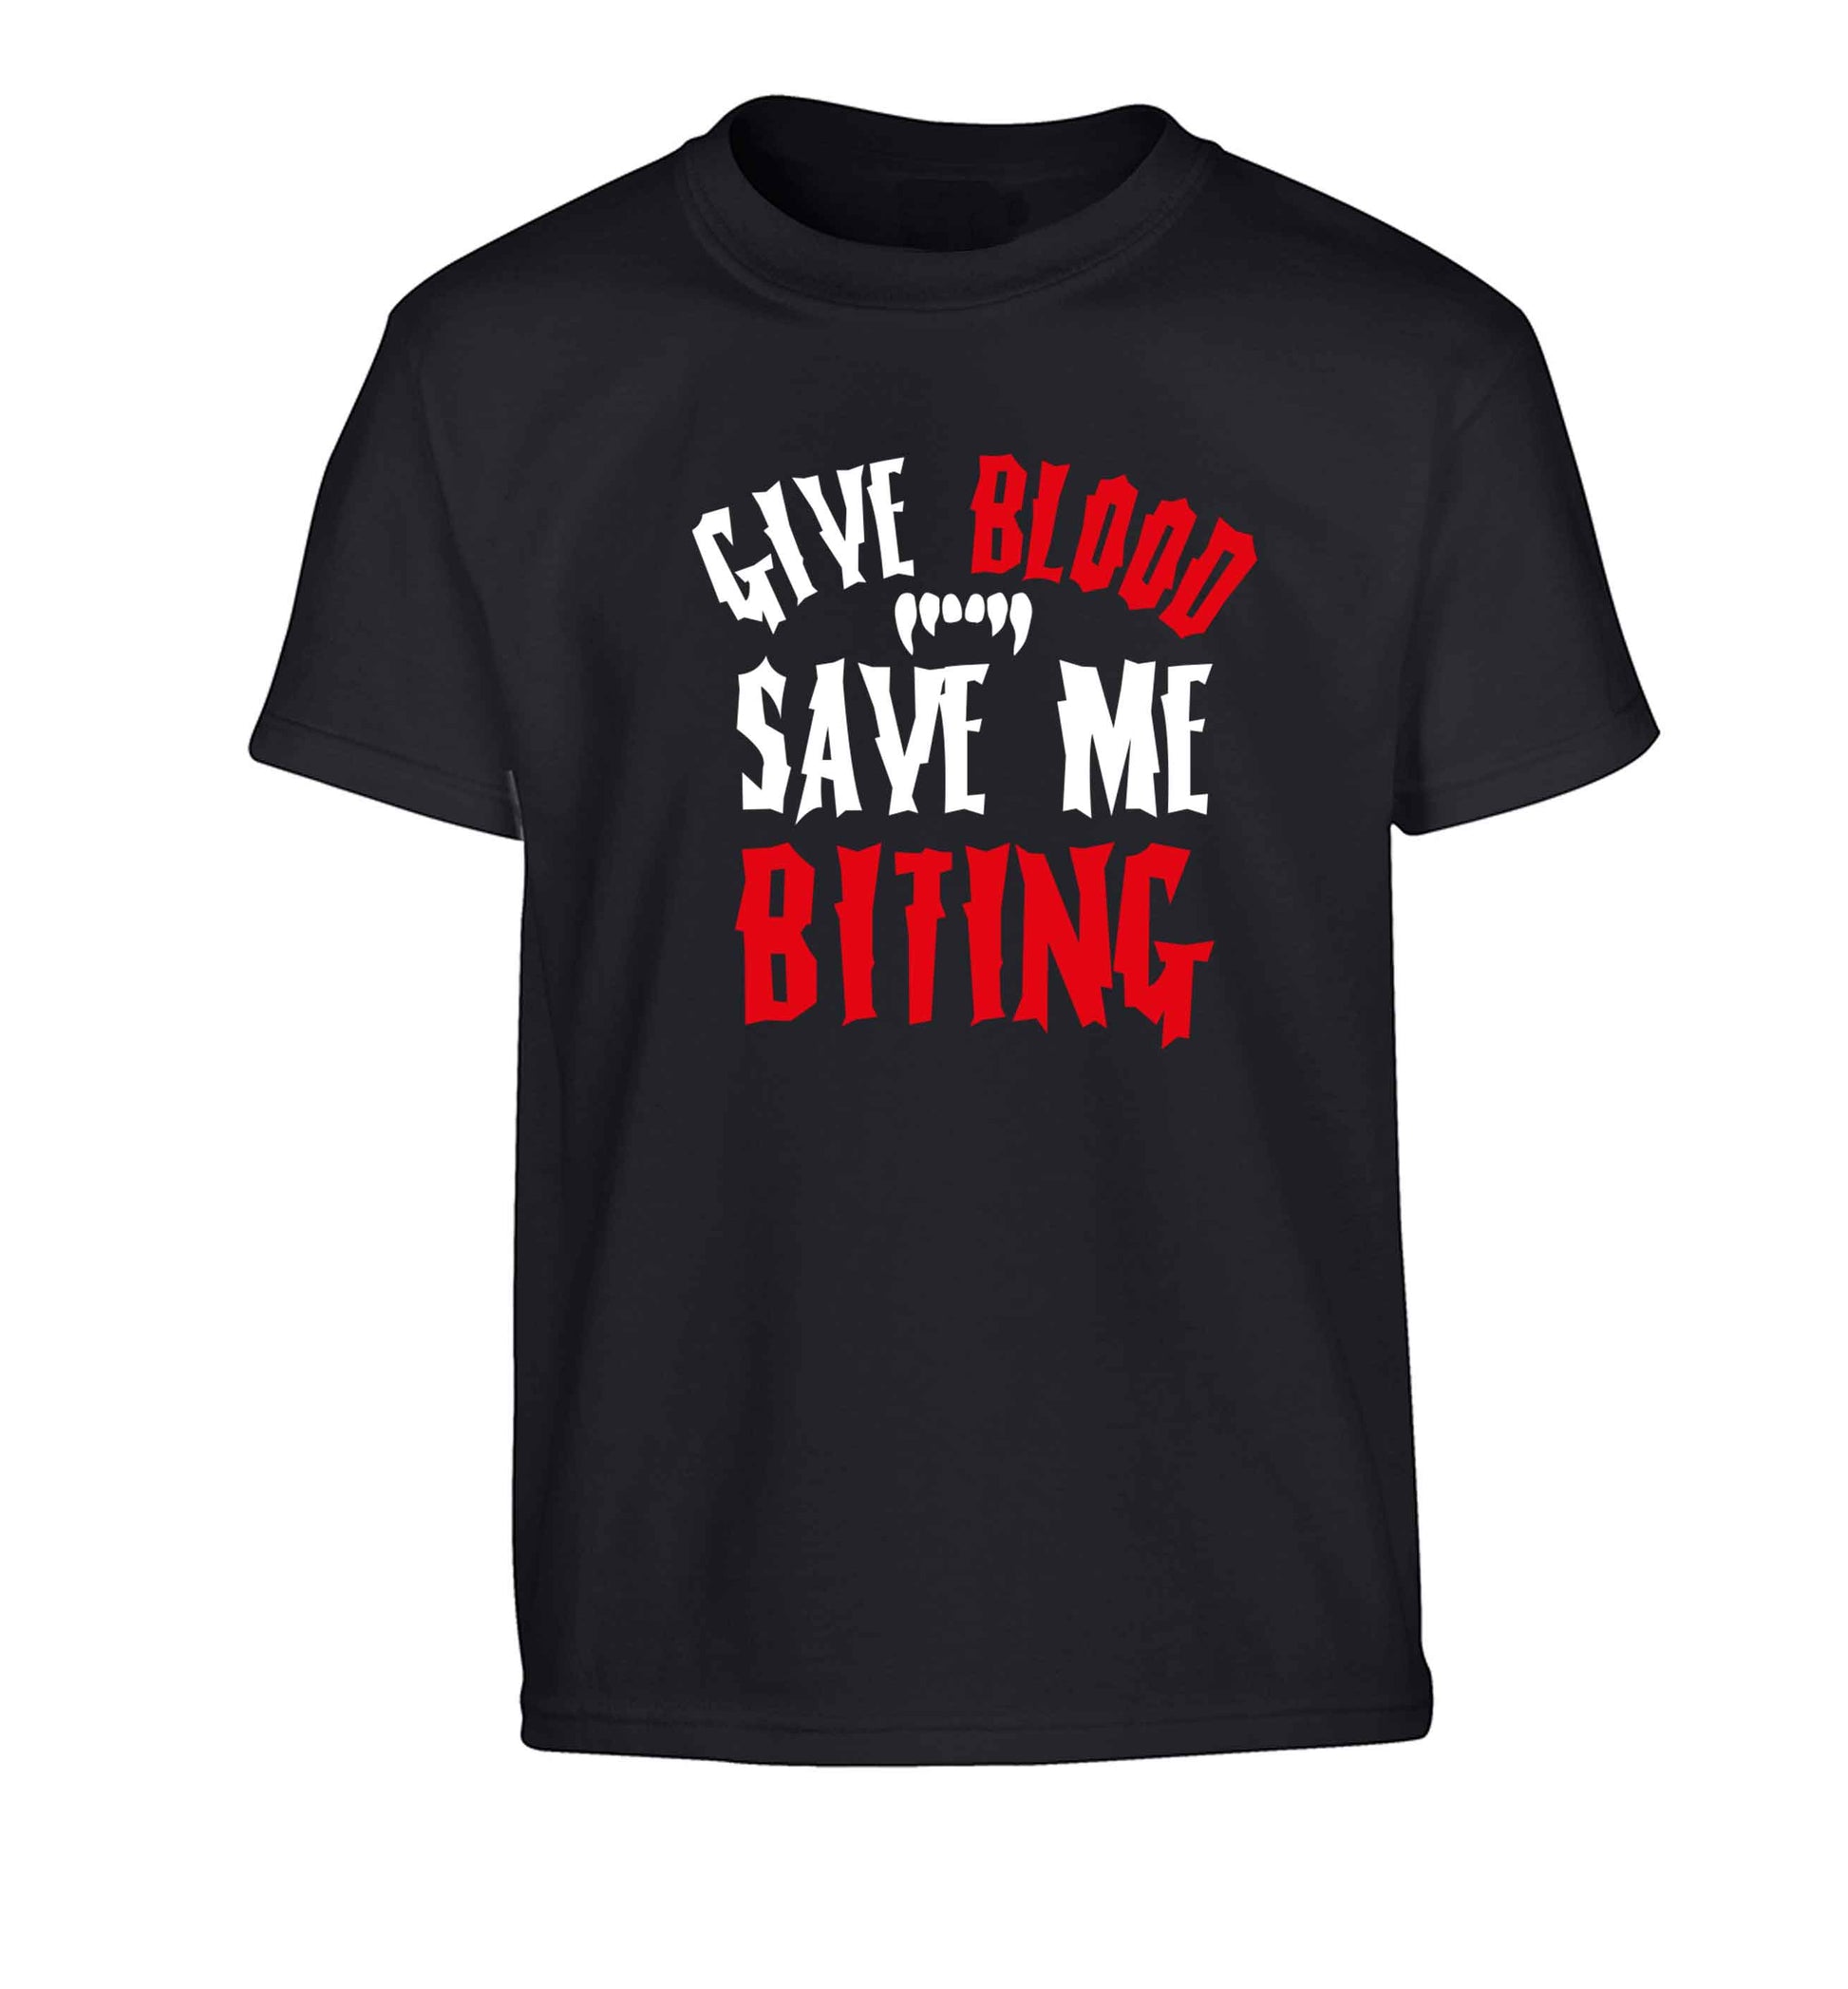 Give blood save me biting Children's black Tshirt 12-13 Years